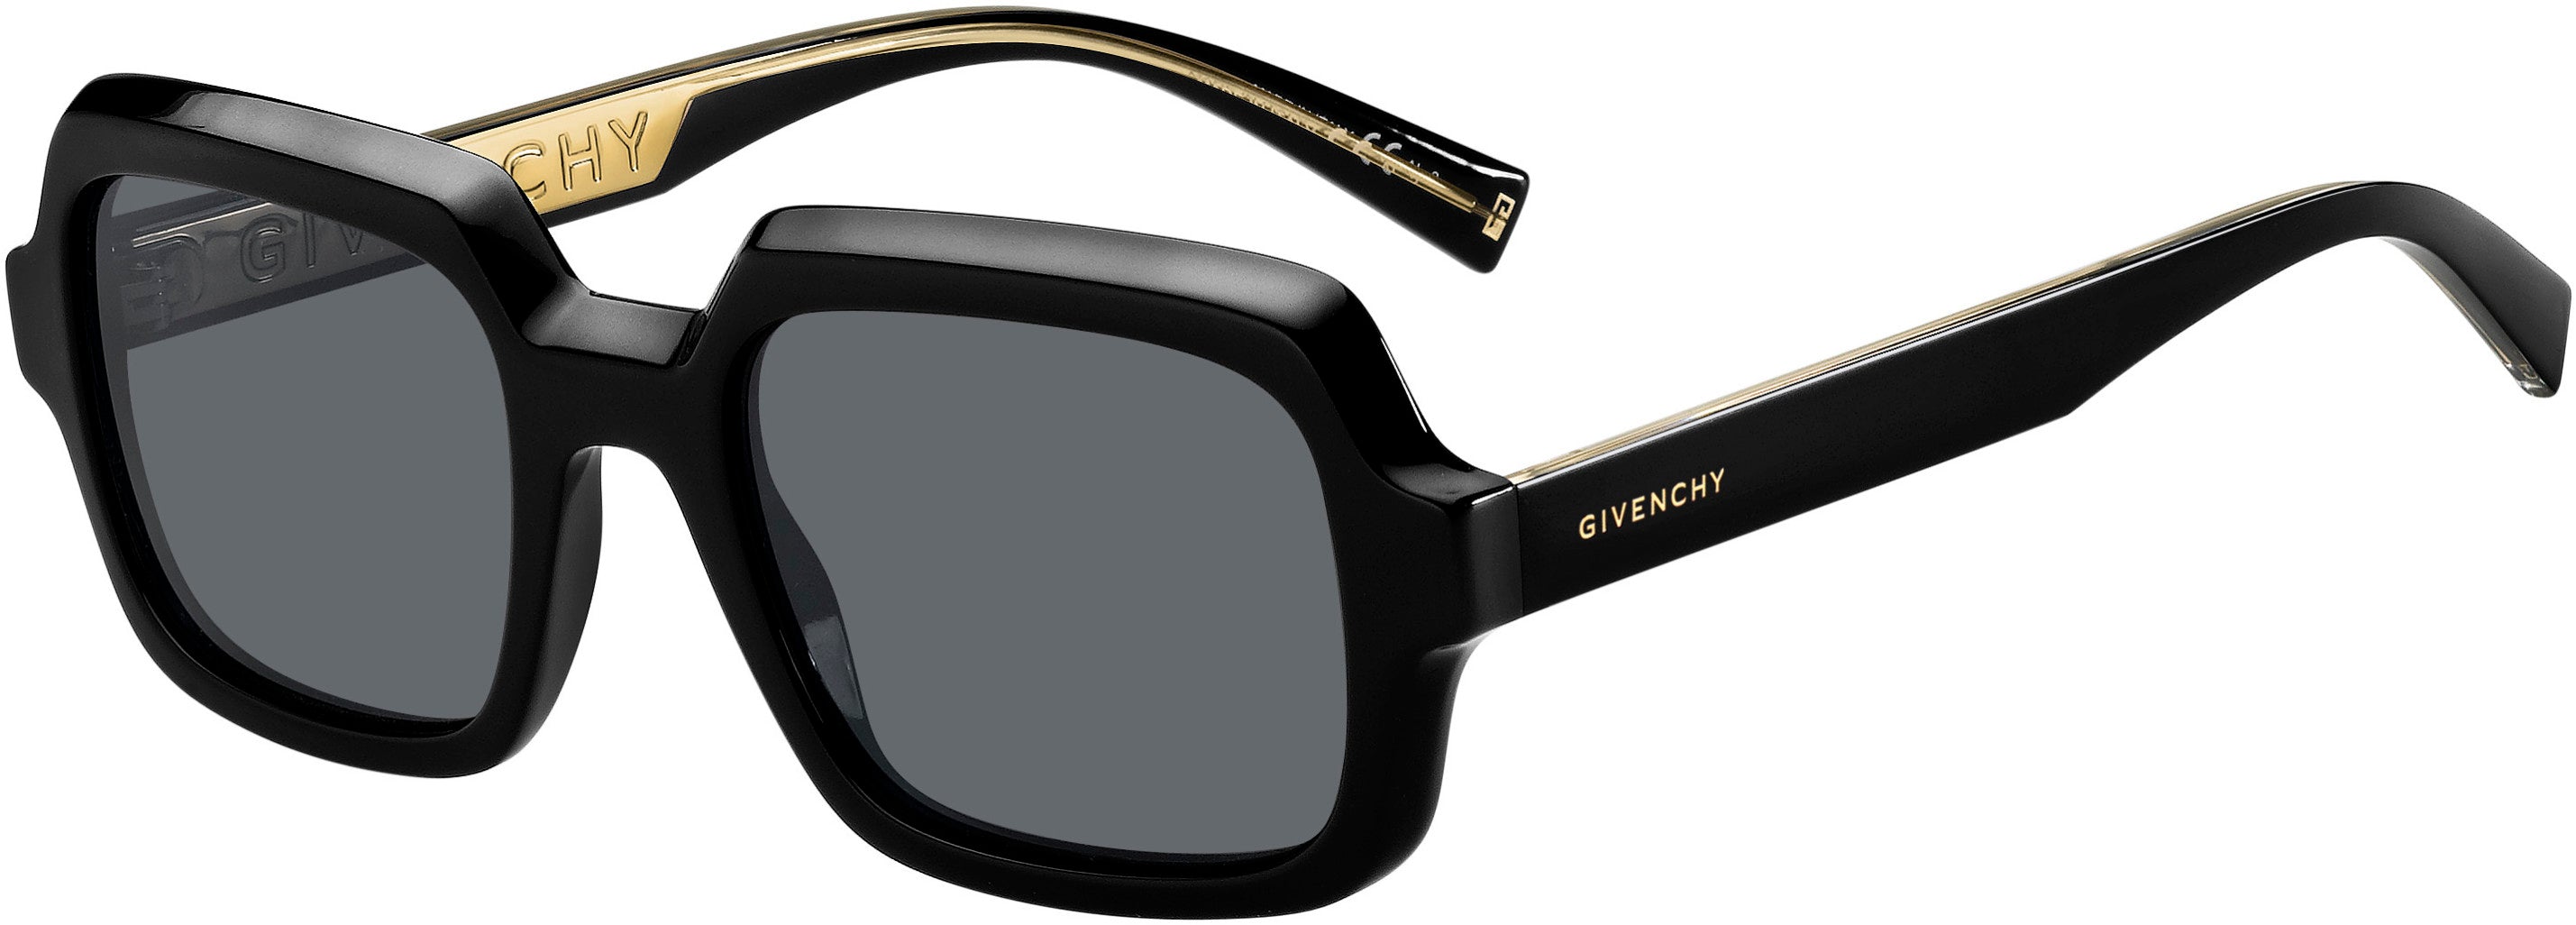  Givenchy 7153/S Rectangular Sunglasses 0807-0807  Black (IR Gray)